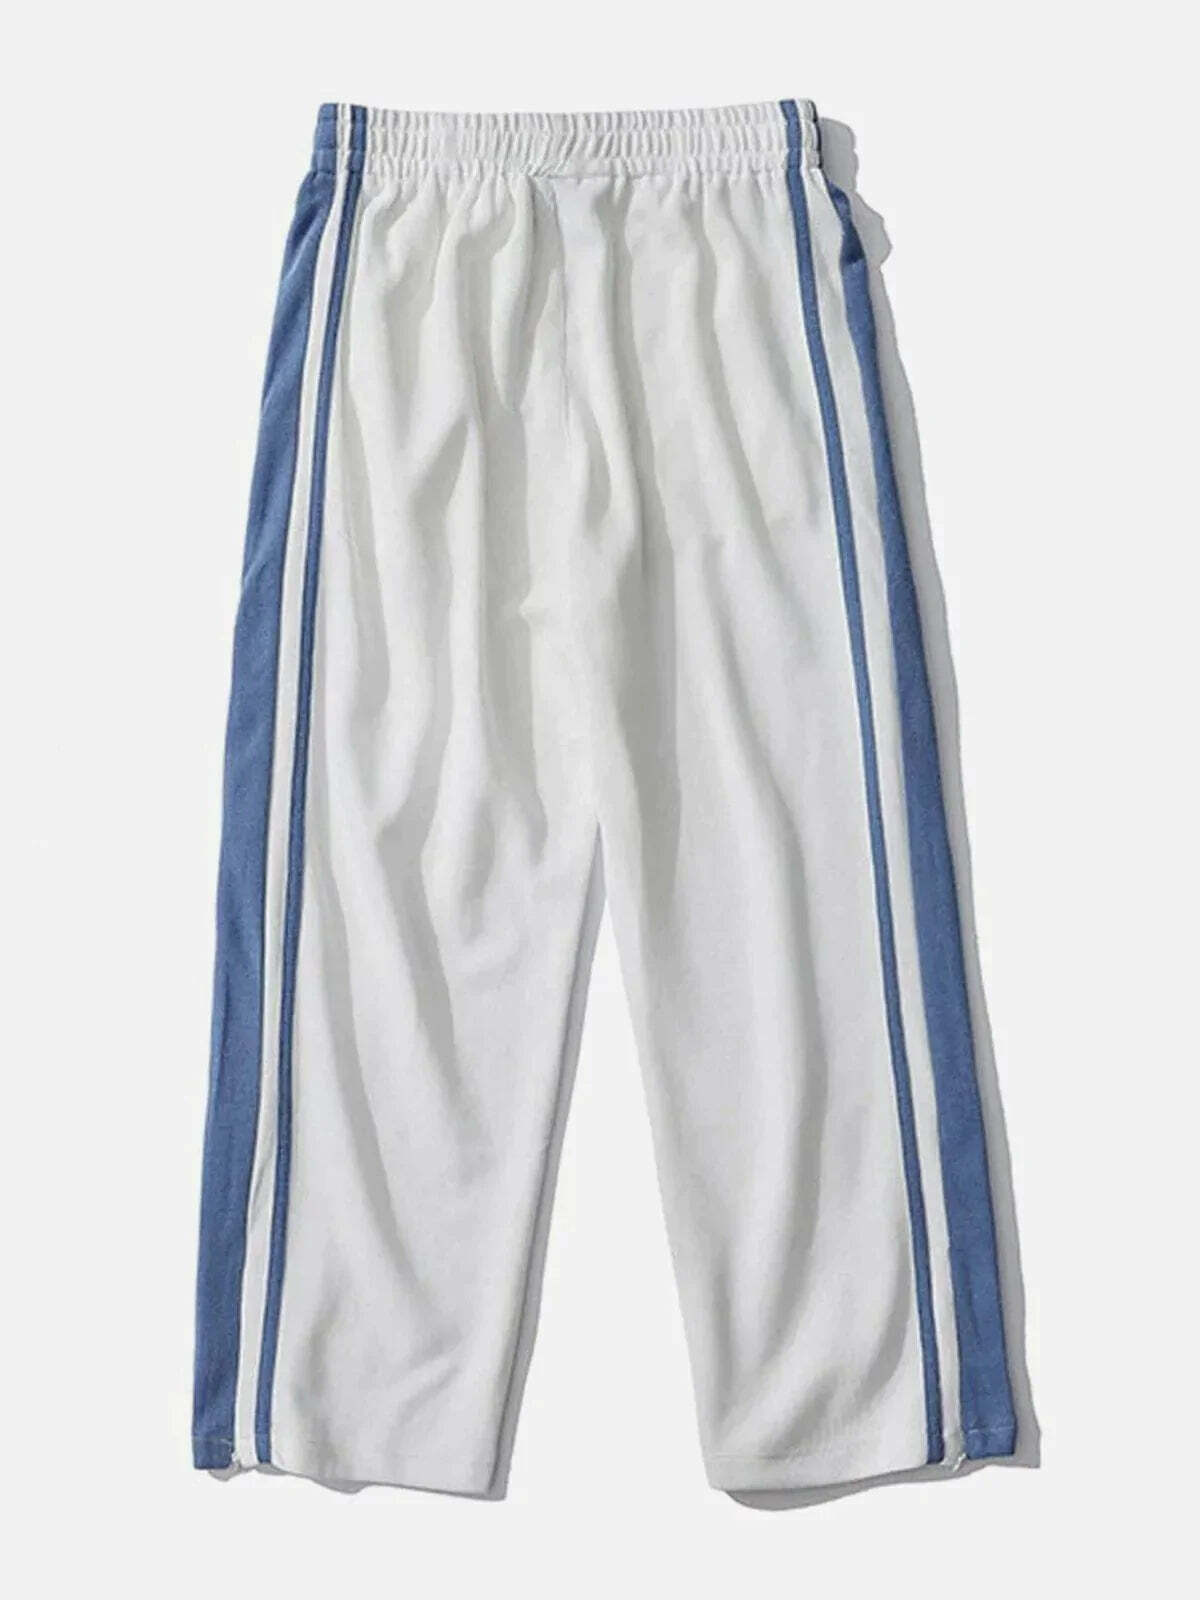 retro side stripe track pants edgy & athletic streetwear 7651